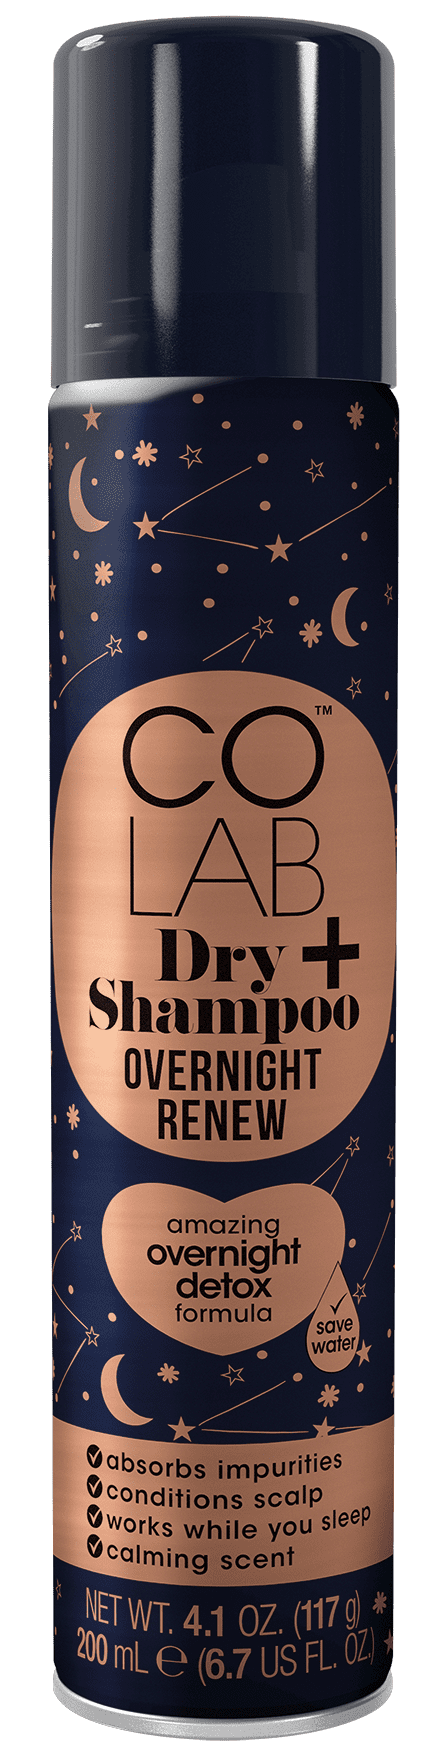 Colab Overnight Renew Dry Shampoo